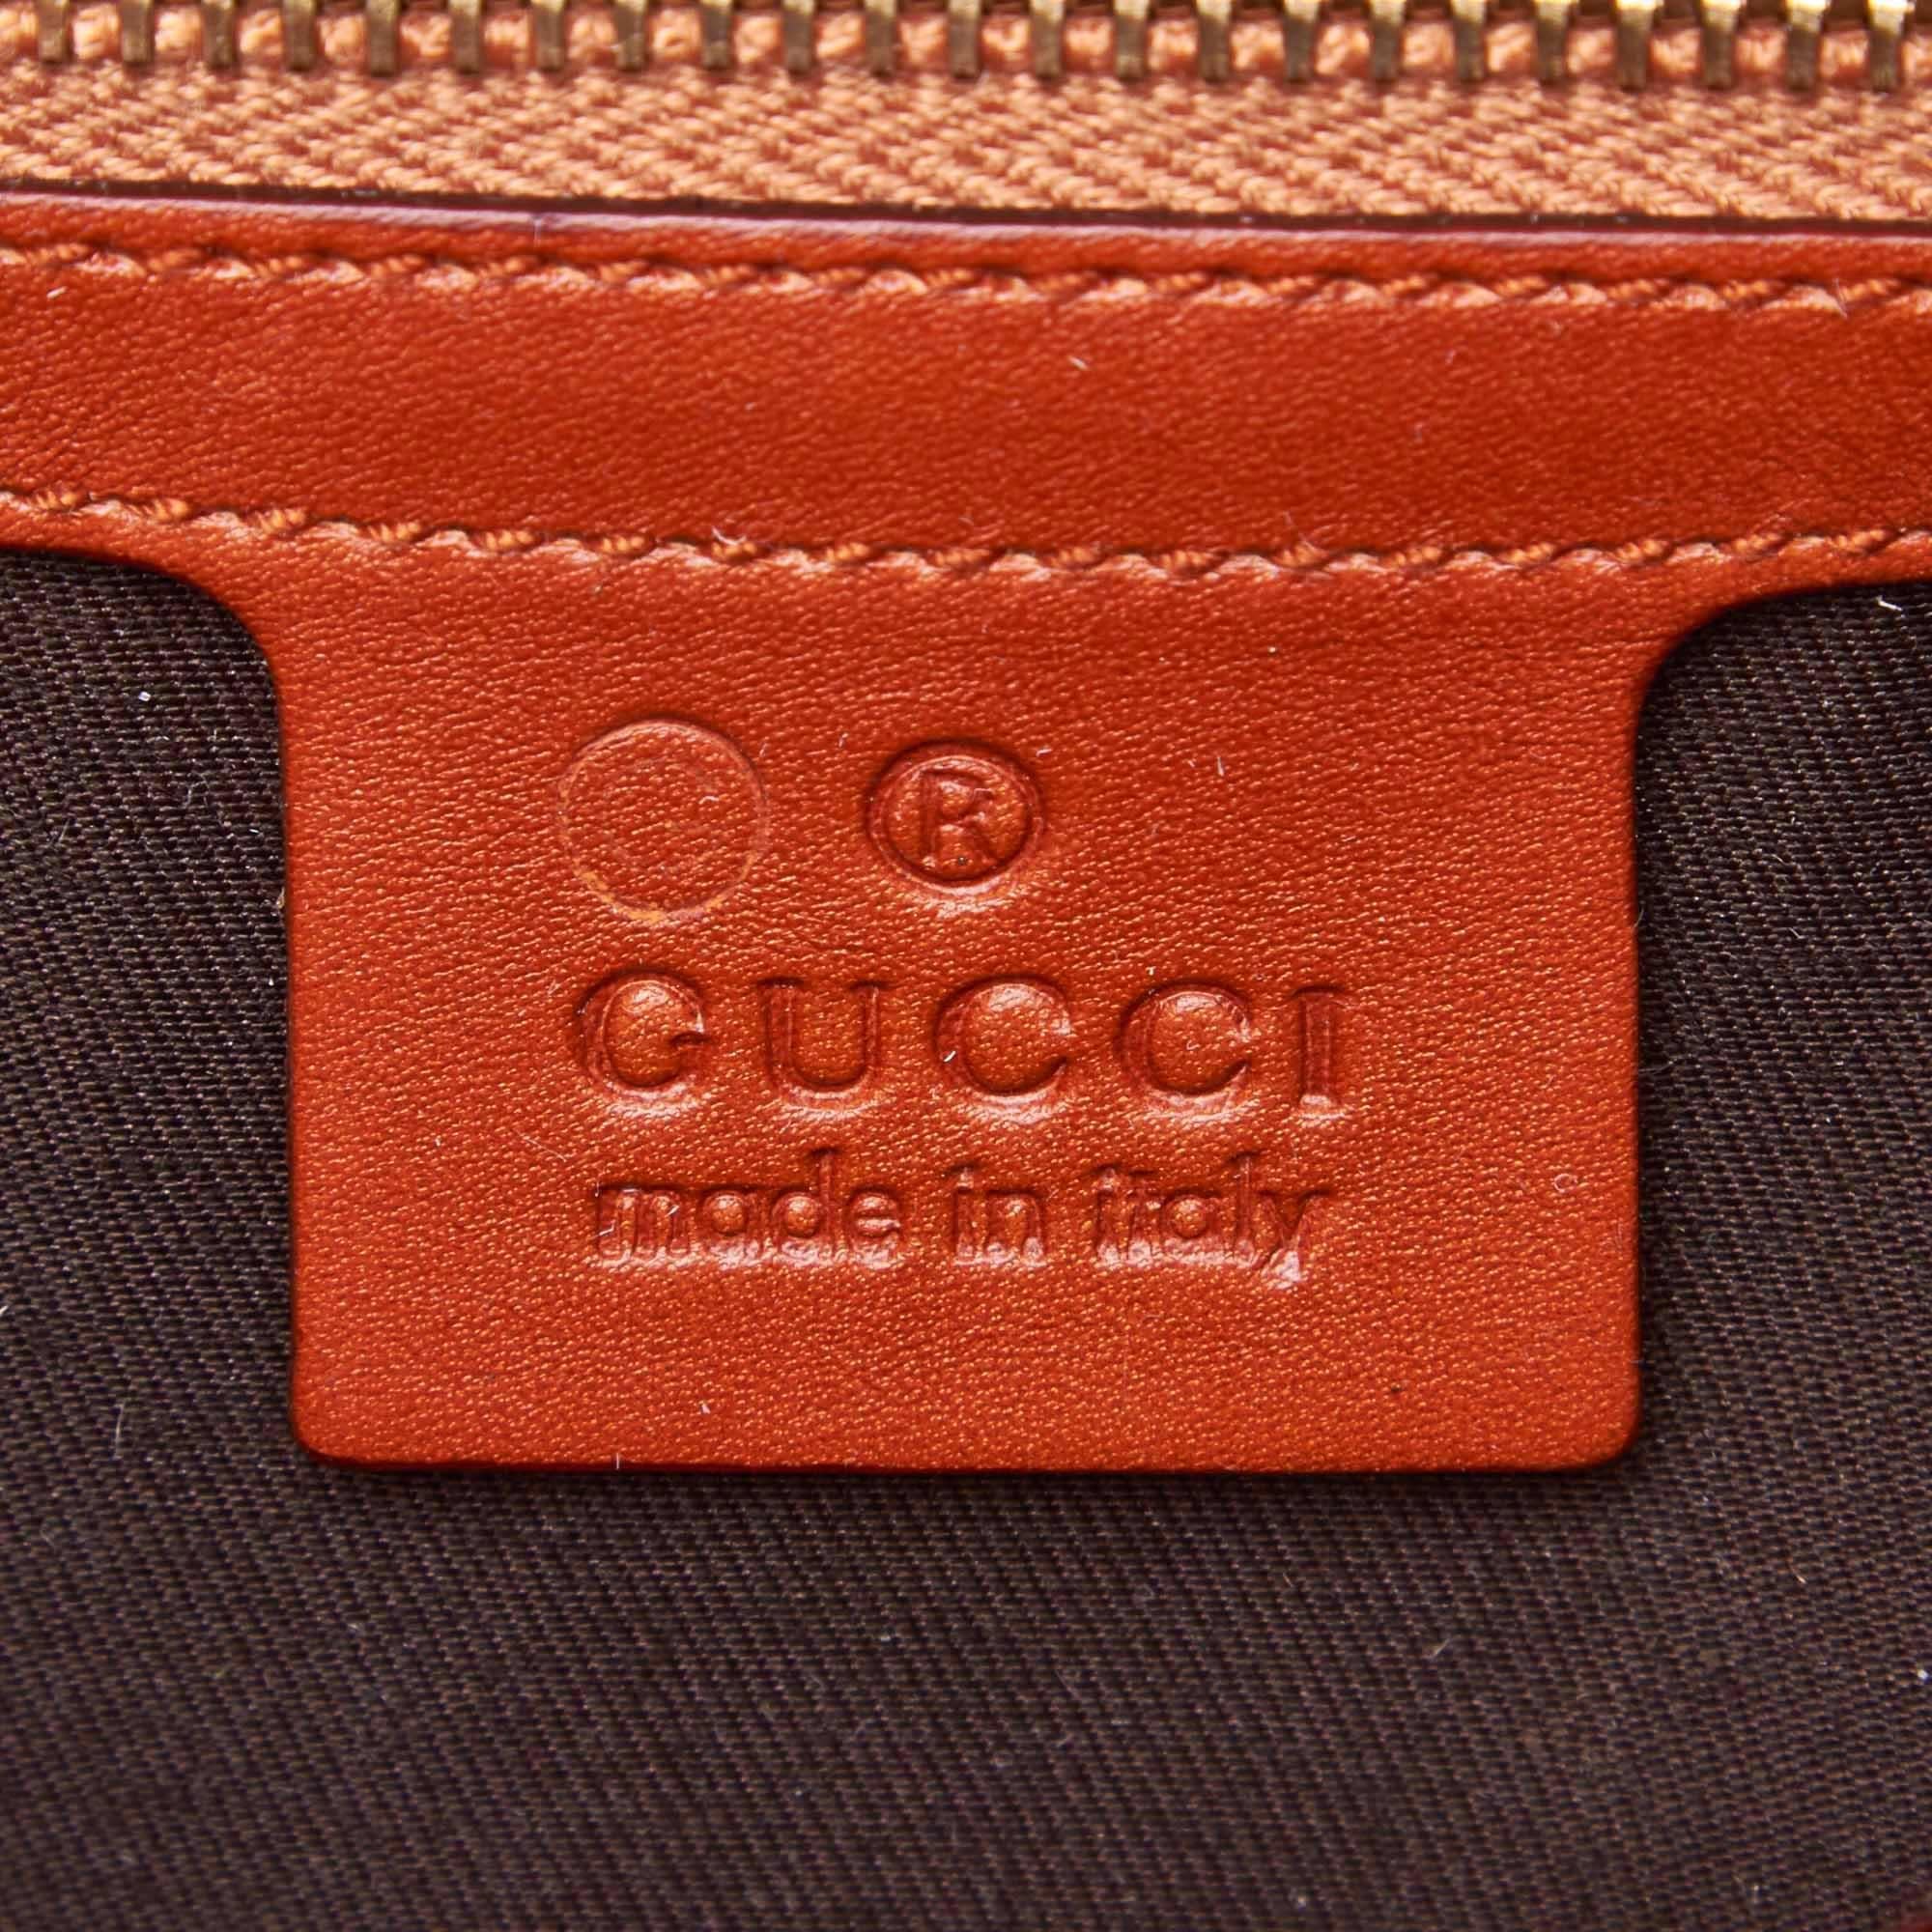 Vintage Authentic Gucci Brown Leather Horsebit Handbag Italy w Dust Bag MEDIUM  1